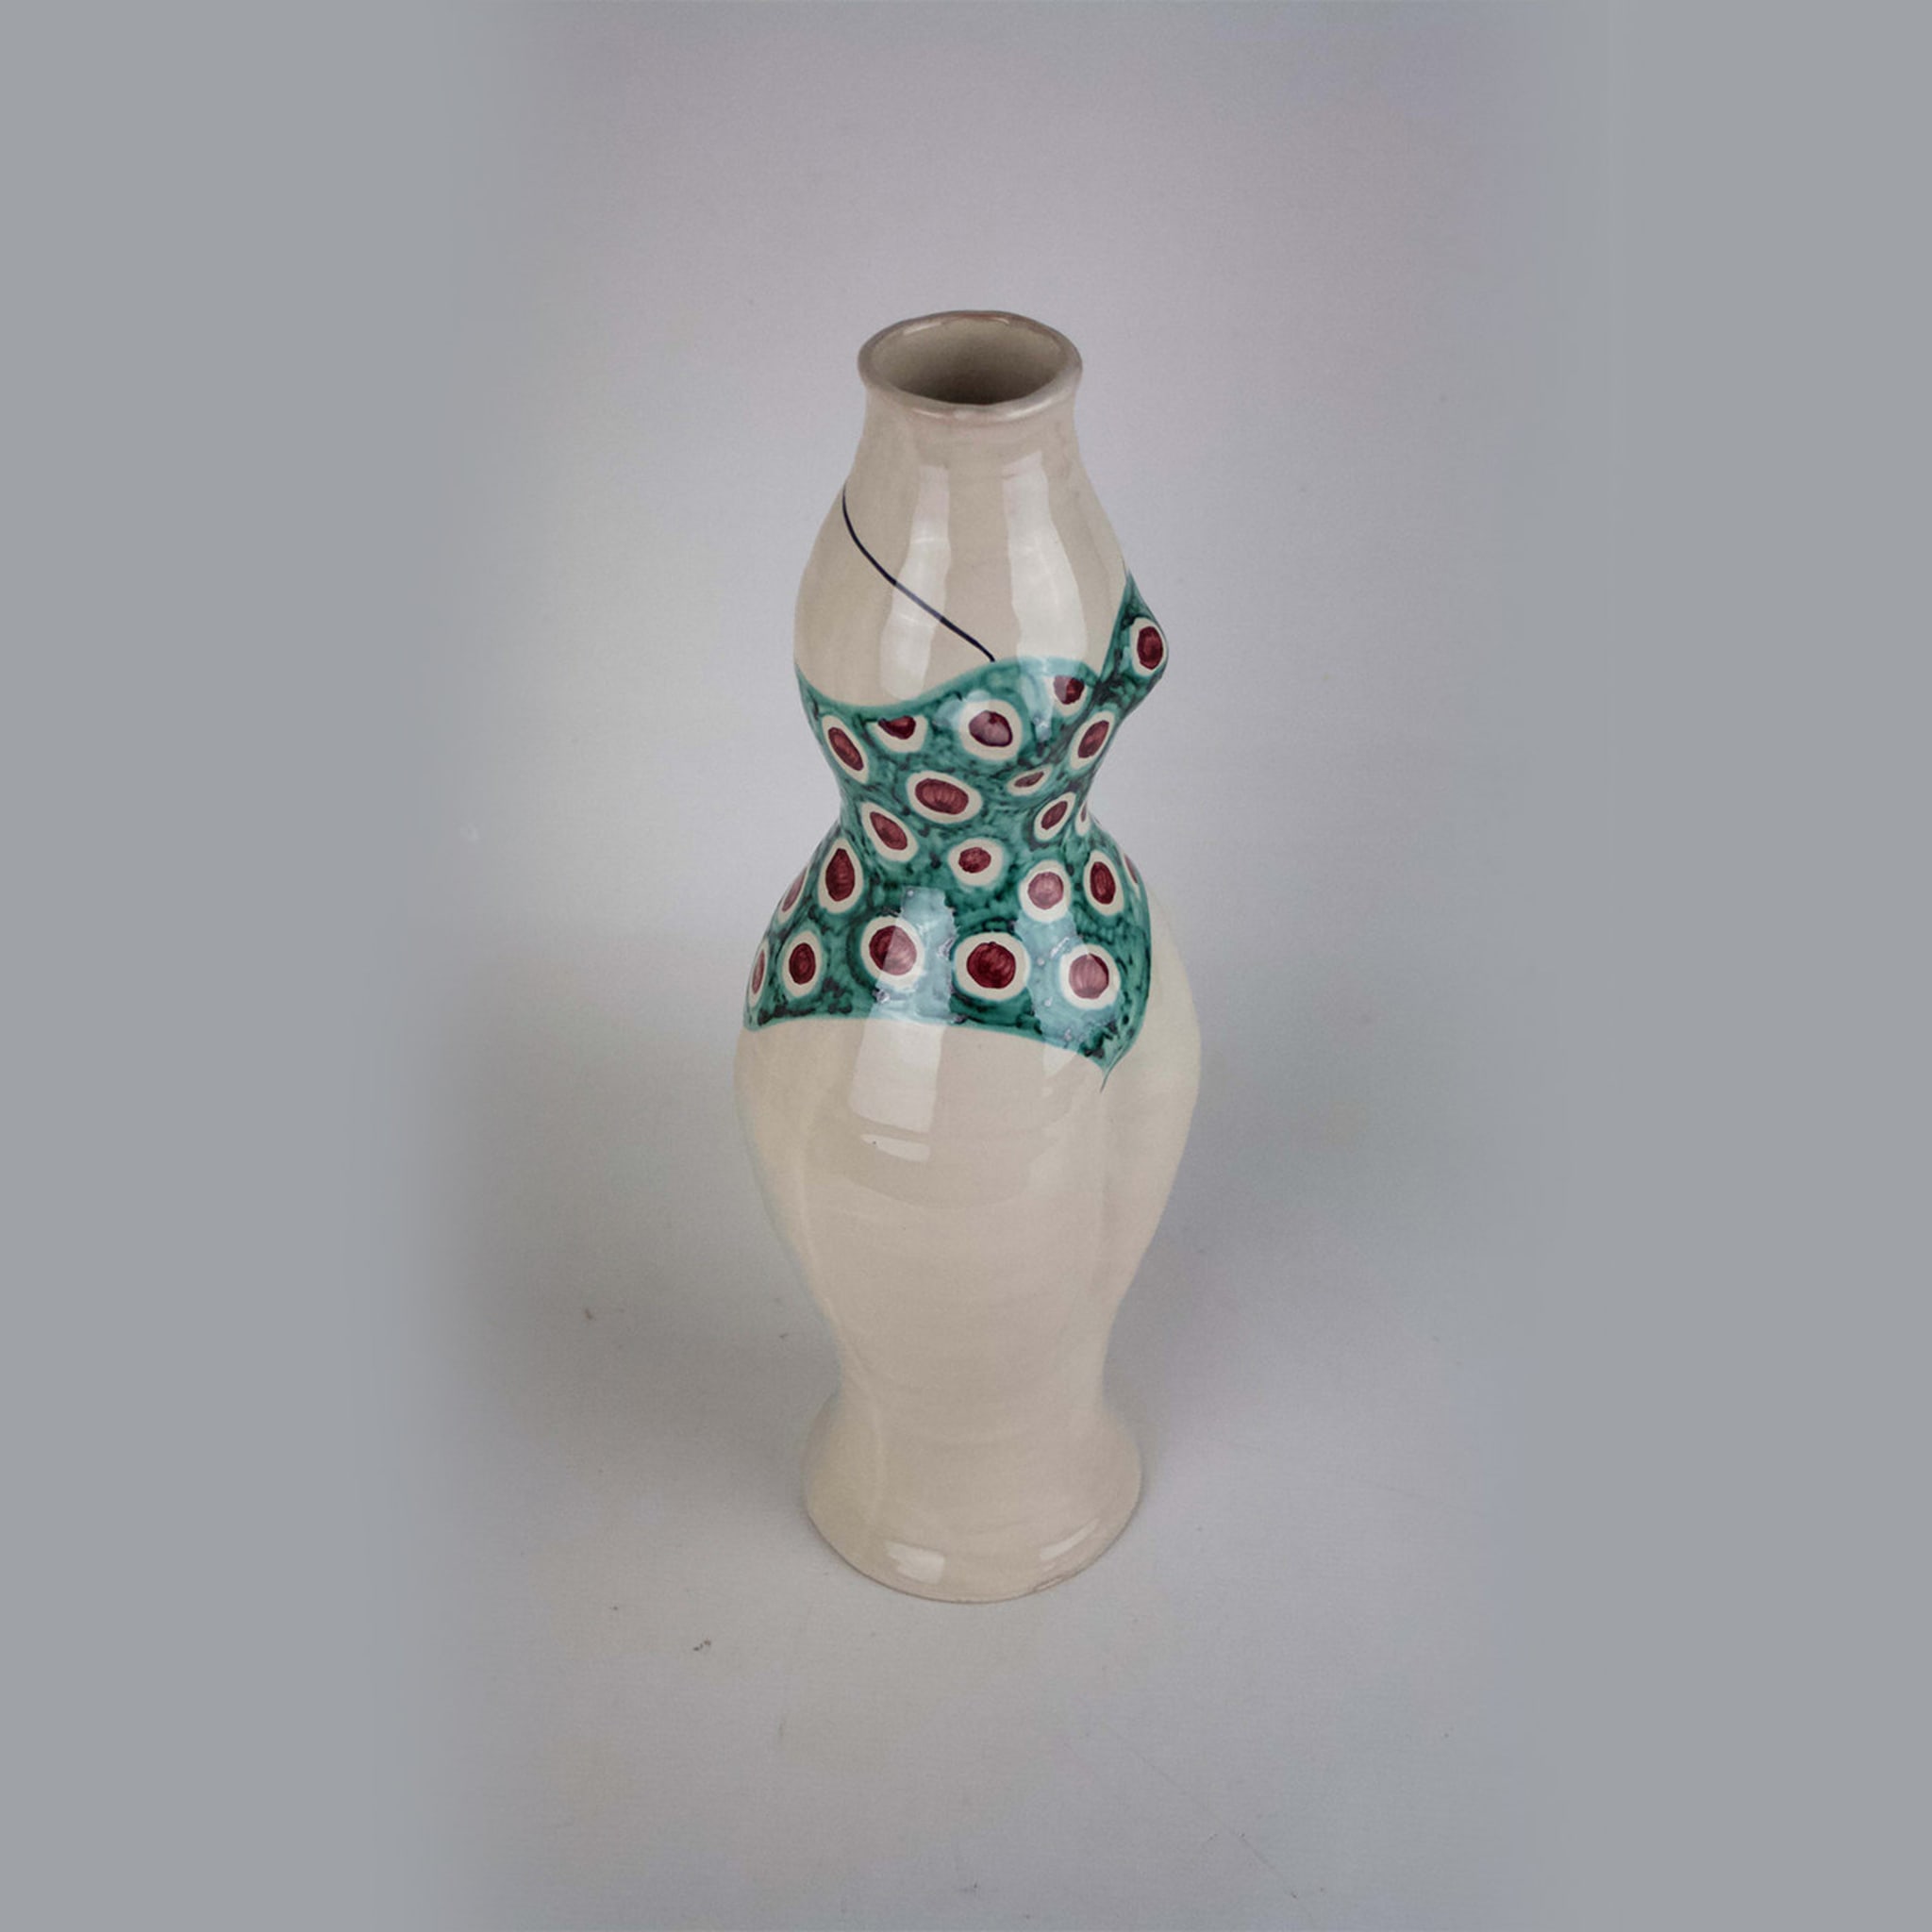 Ceramic Polka Dot Bathing Suit Sculpture Vase  - Alternative view 3